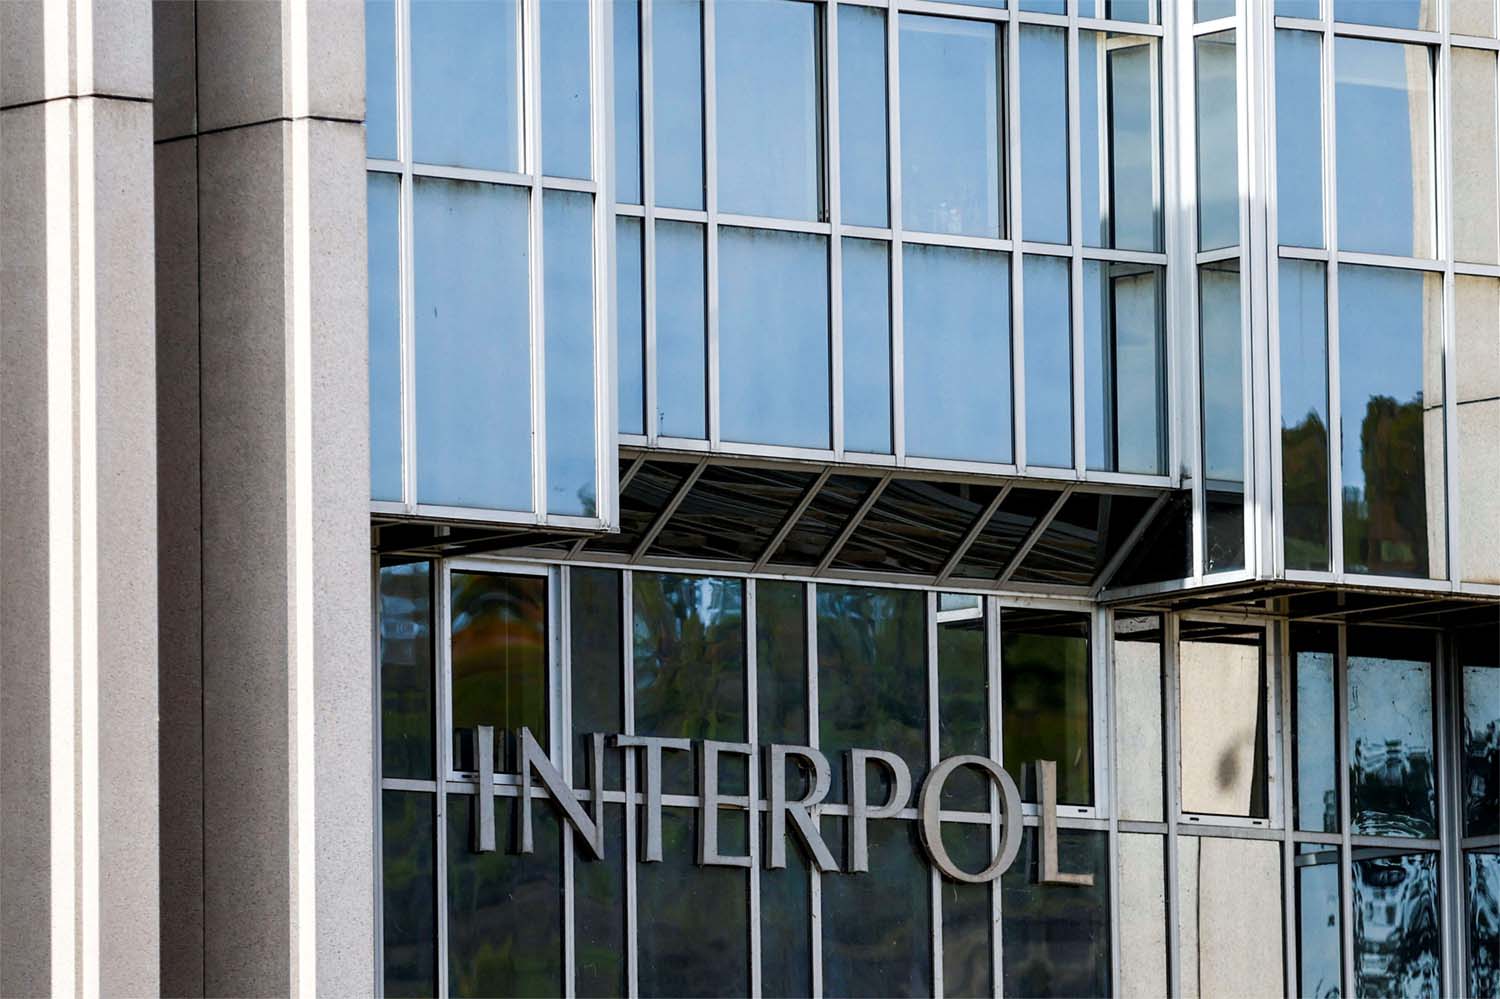 The International Criminal Police Organization (INTERPOL) headquarters in Lyon